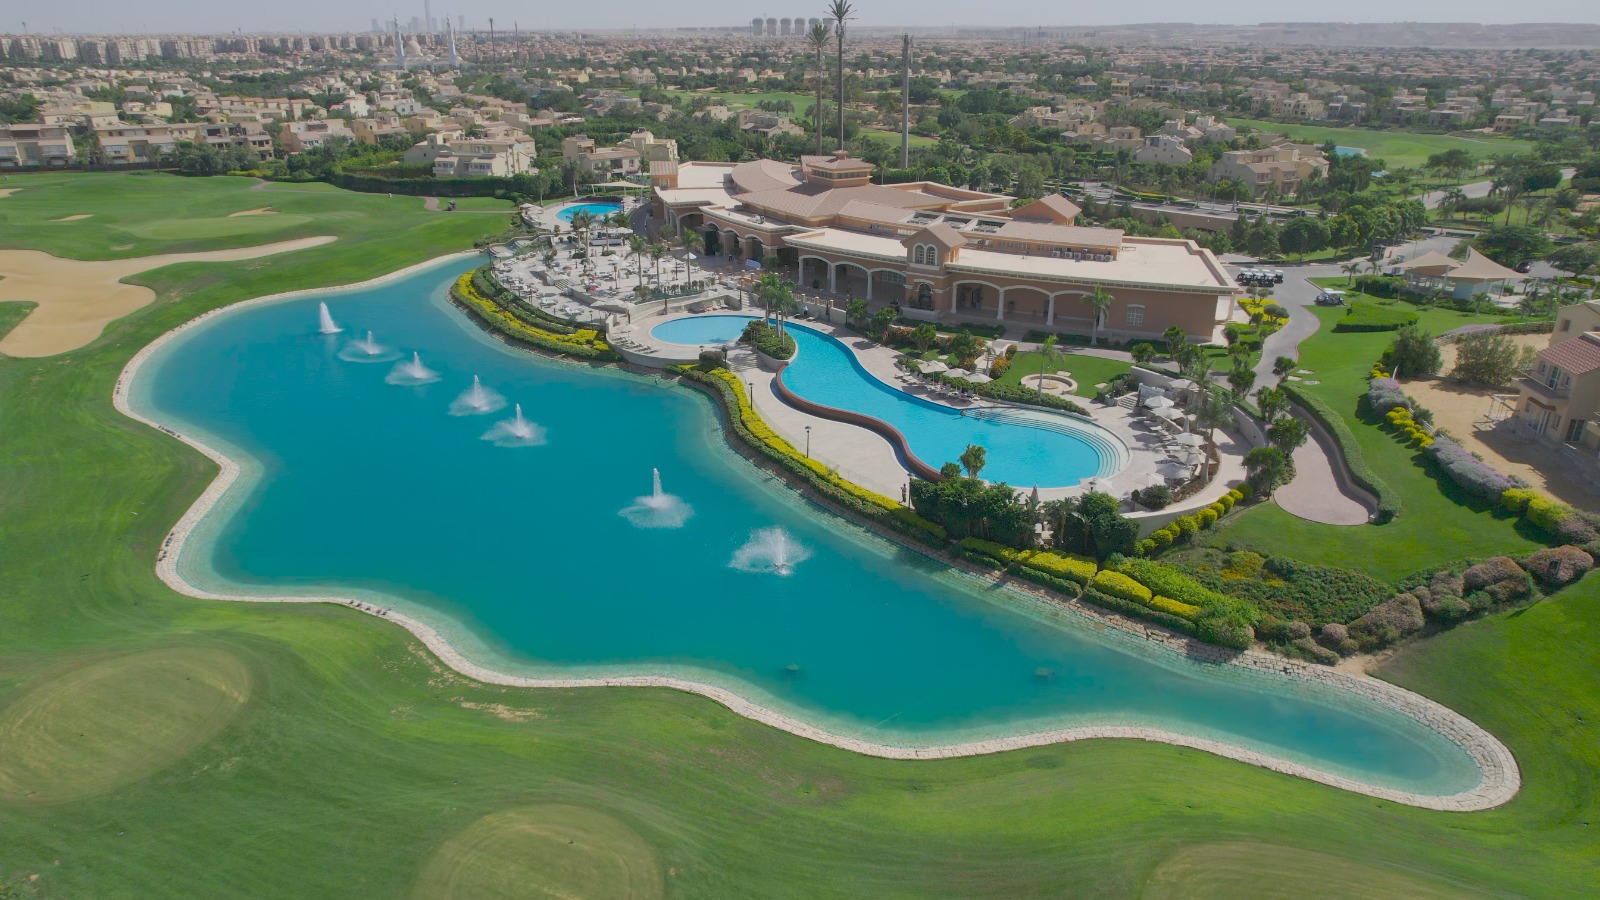 Madinaty Golf Club emerges as Egypt’s hub for global brand launches: Omar Hisham Talaat